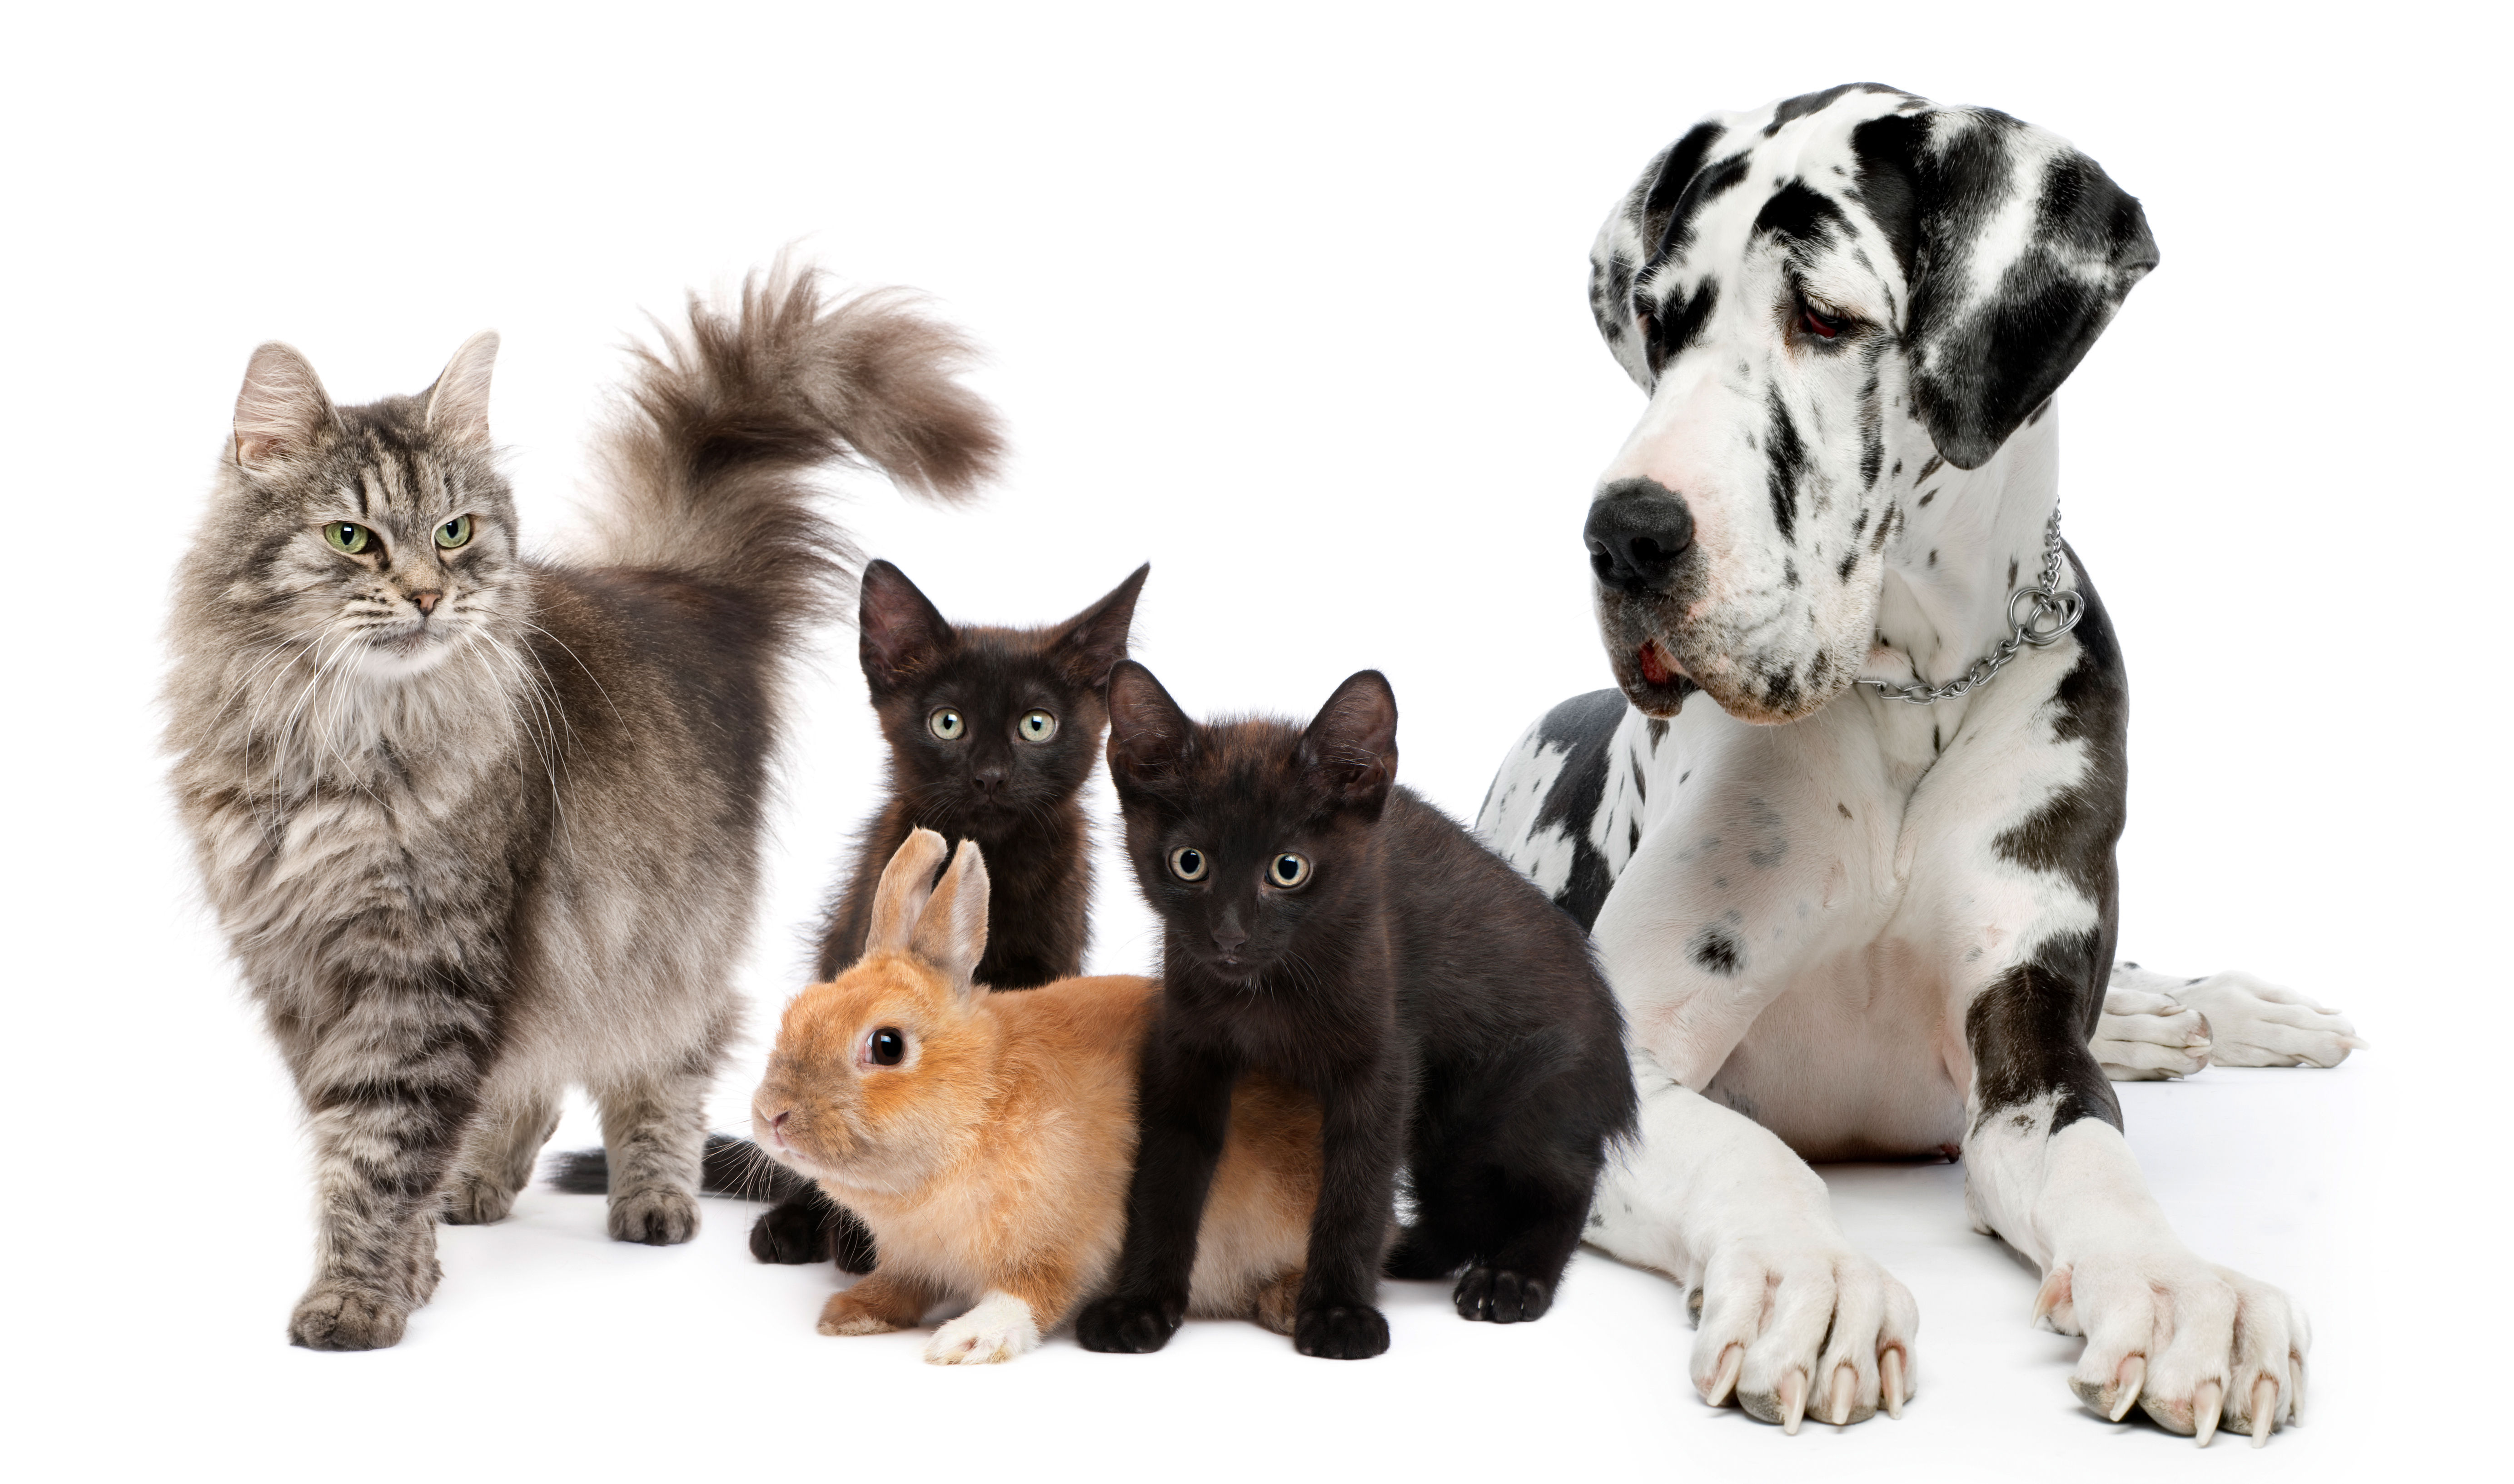 Животные петс. Домашние животные. Кошки и собаки. Животные вместе. Домашние животные на белом фоне.